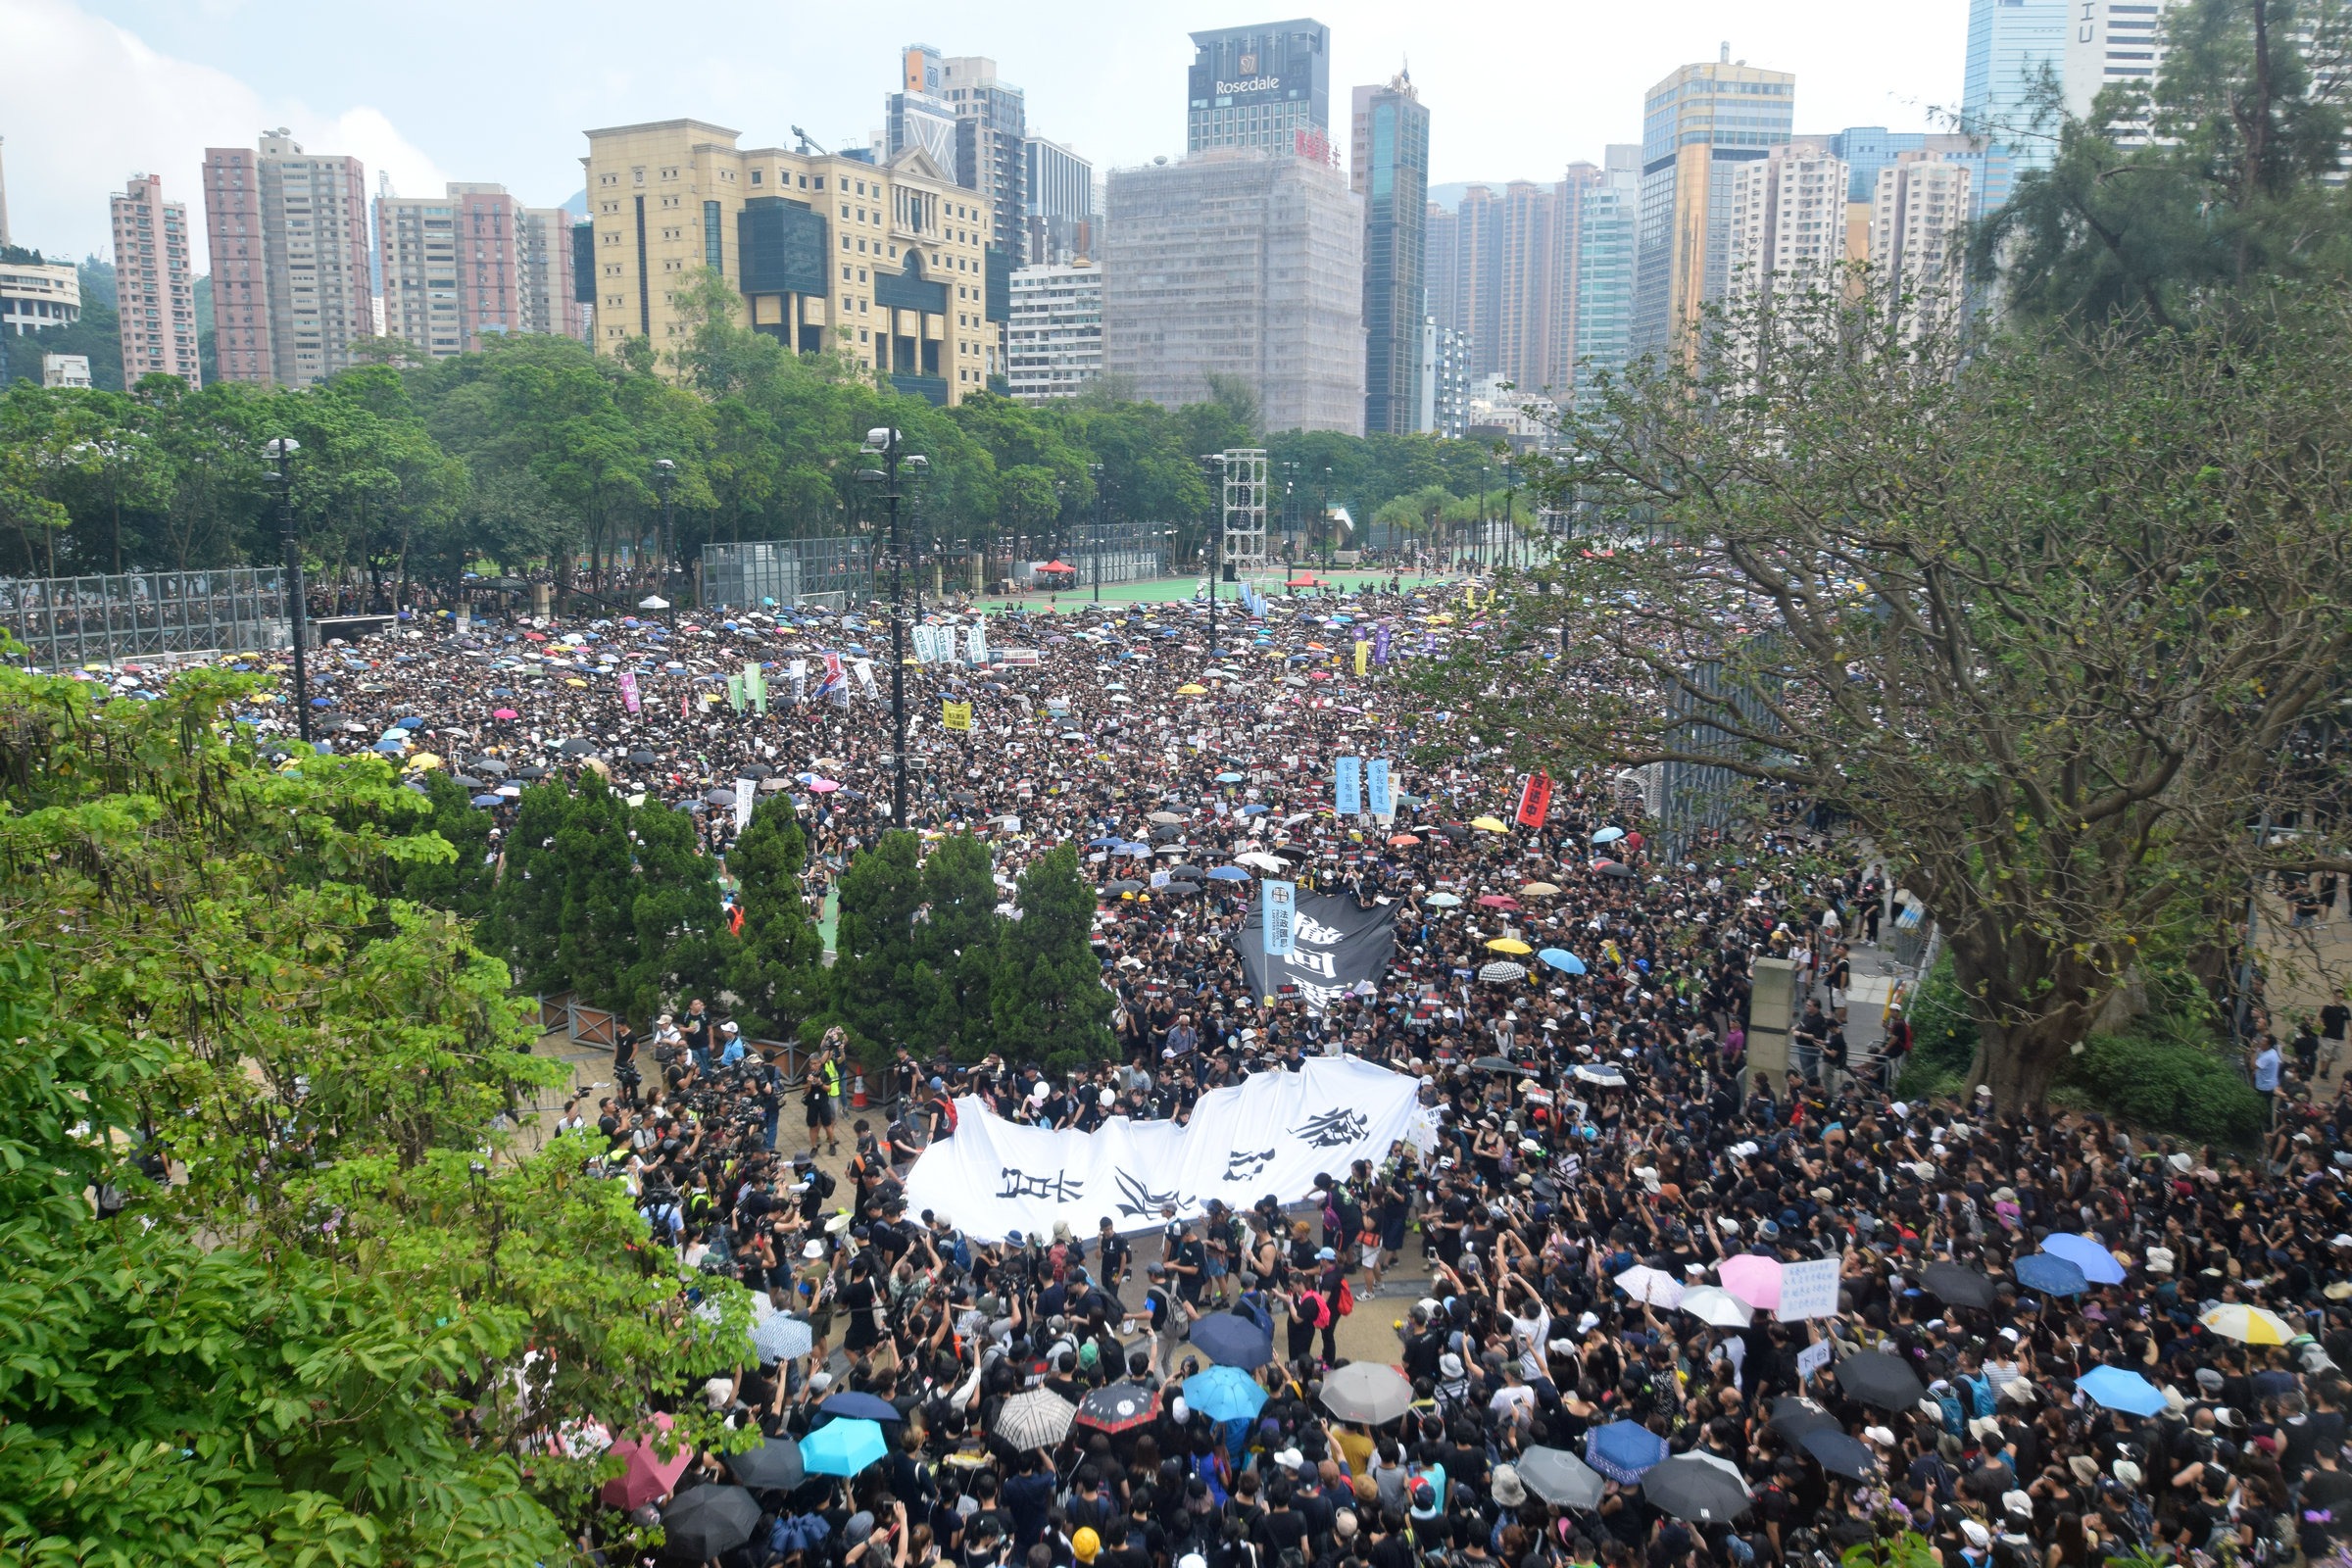 https://upload.wikimedia.org/wikipedia/commons/c/ce/Hong_Kong_Demonstration_20190616_Victoria_Park-1.jpg